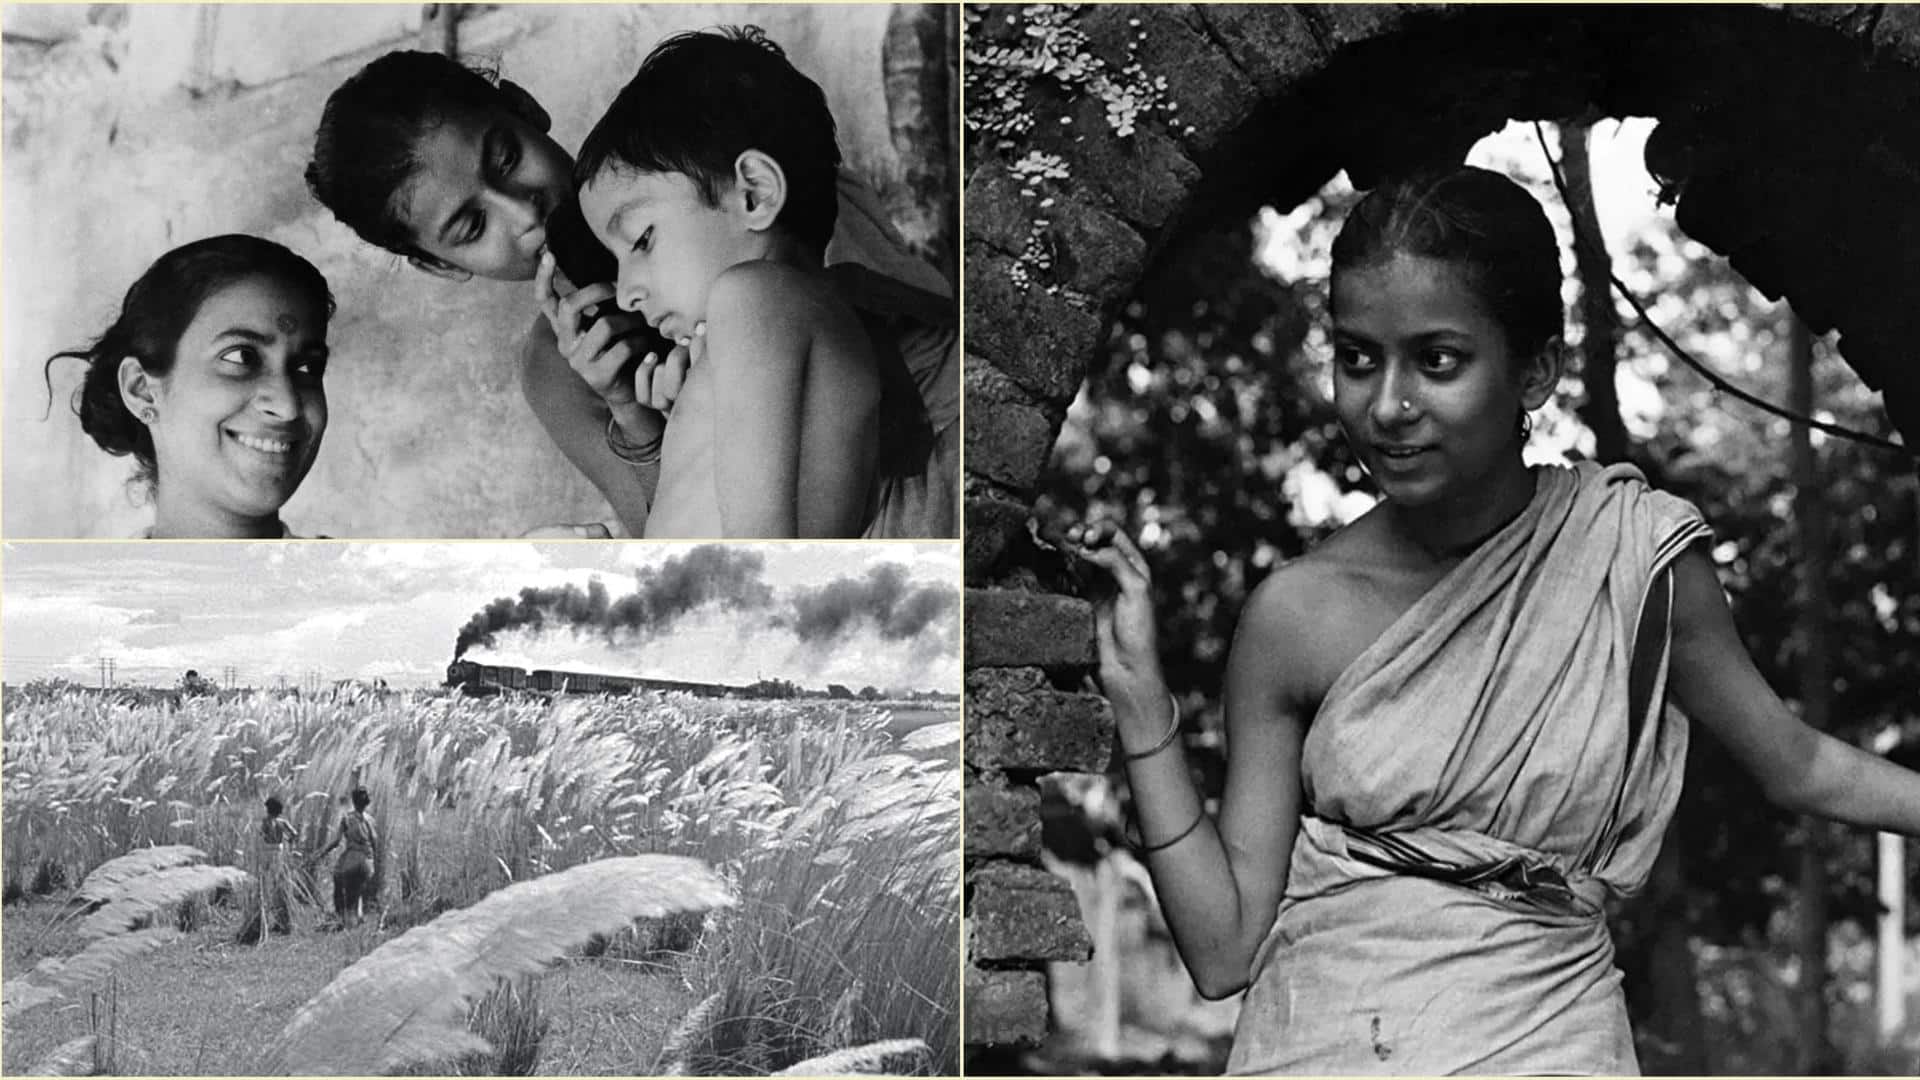 'Pather Panchali' scenes that make the Satyajit Ray directorial extraordinary